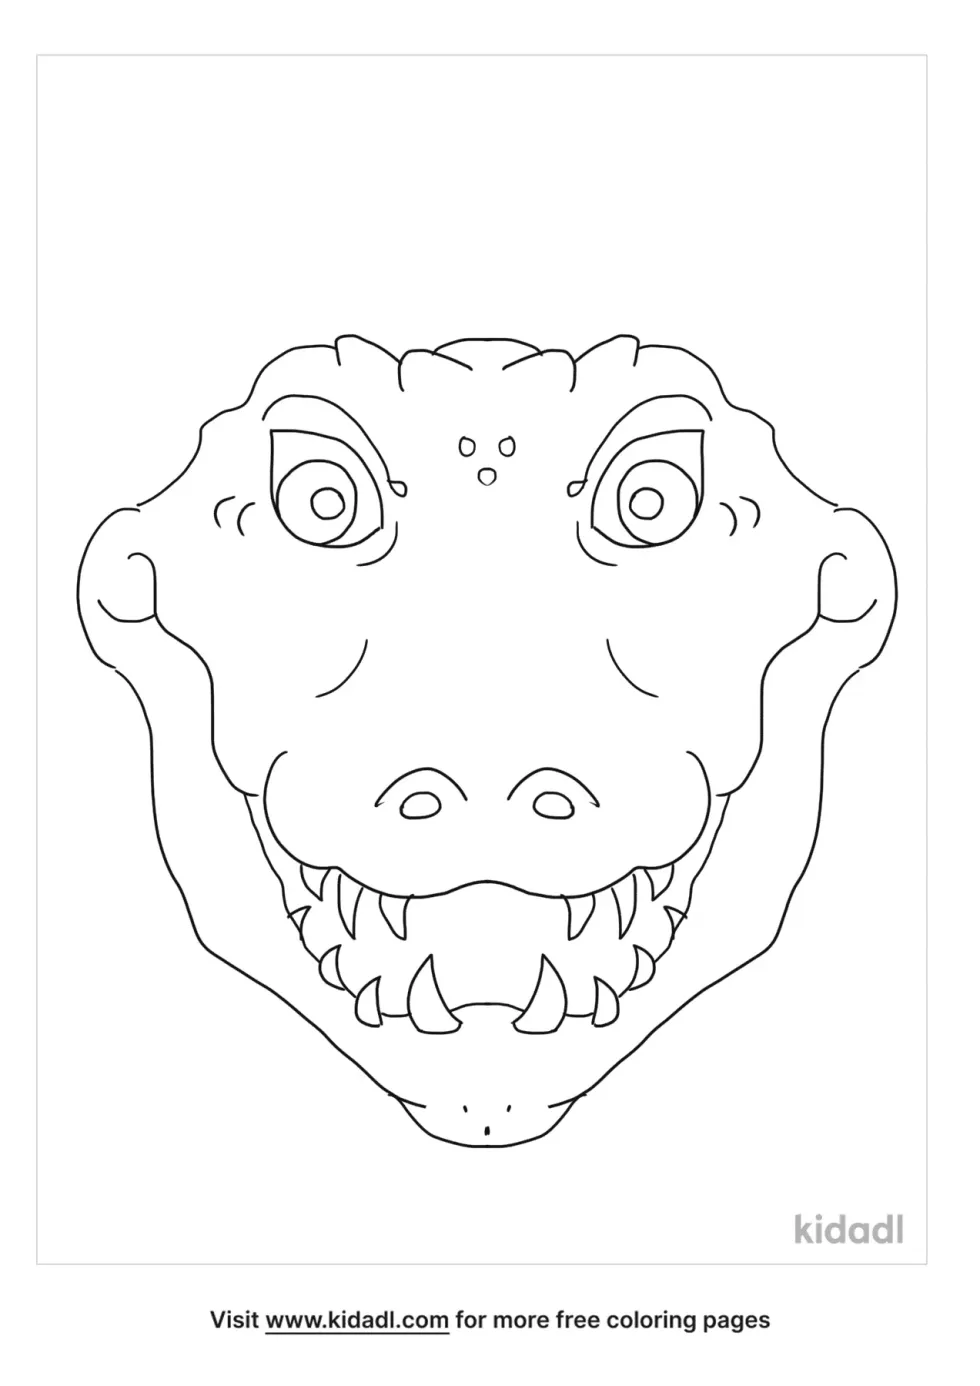 Alligator Mask Template | Kidadl